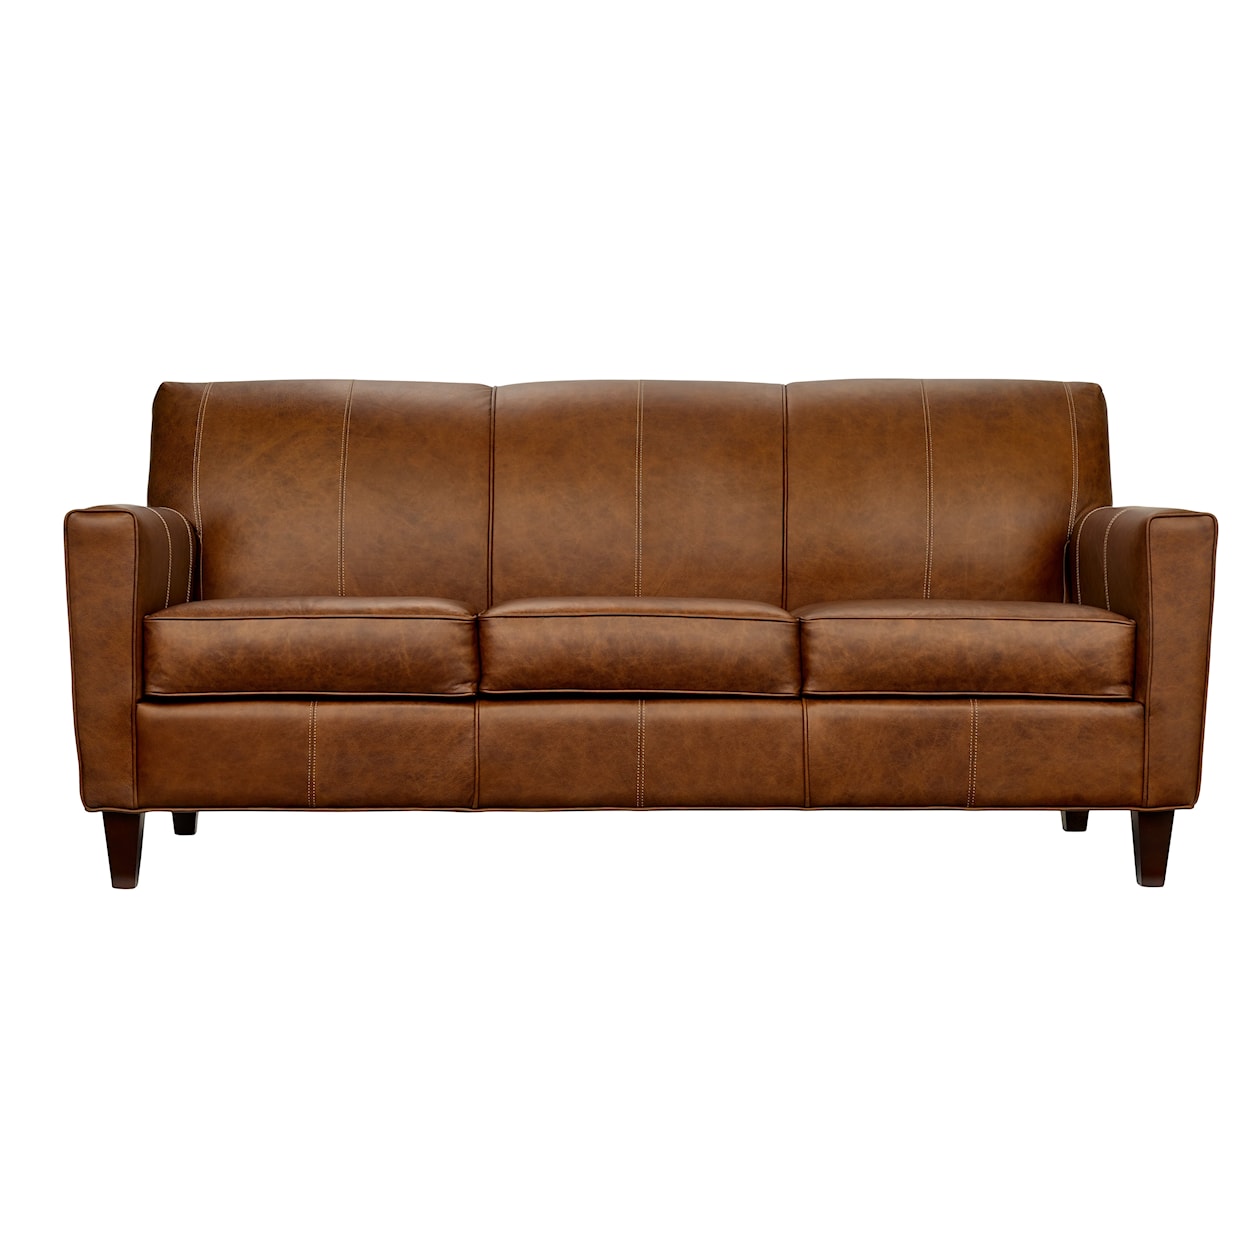 Lancer 470 Leather Sofa